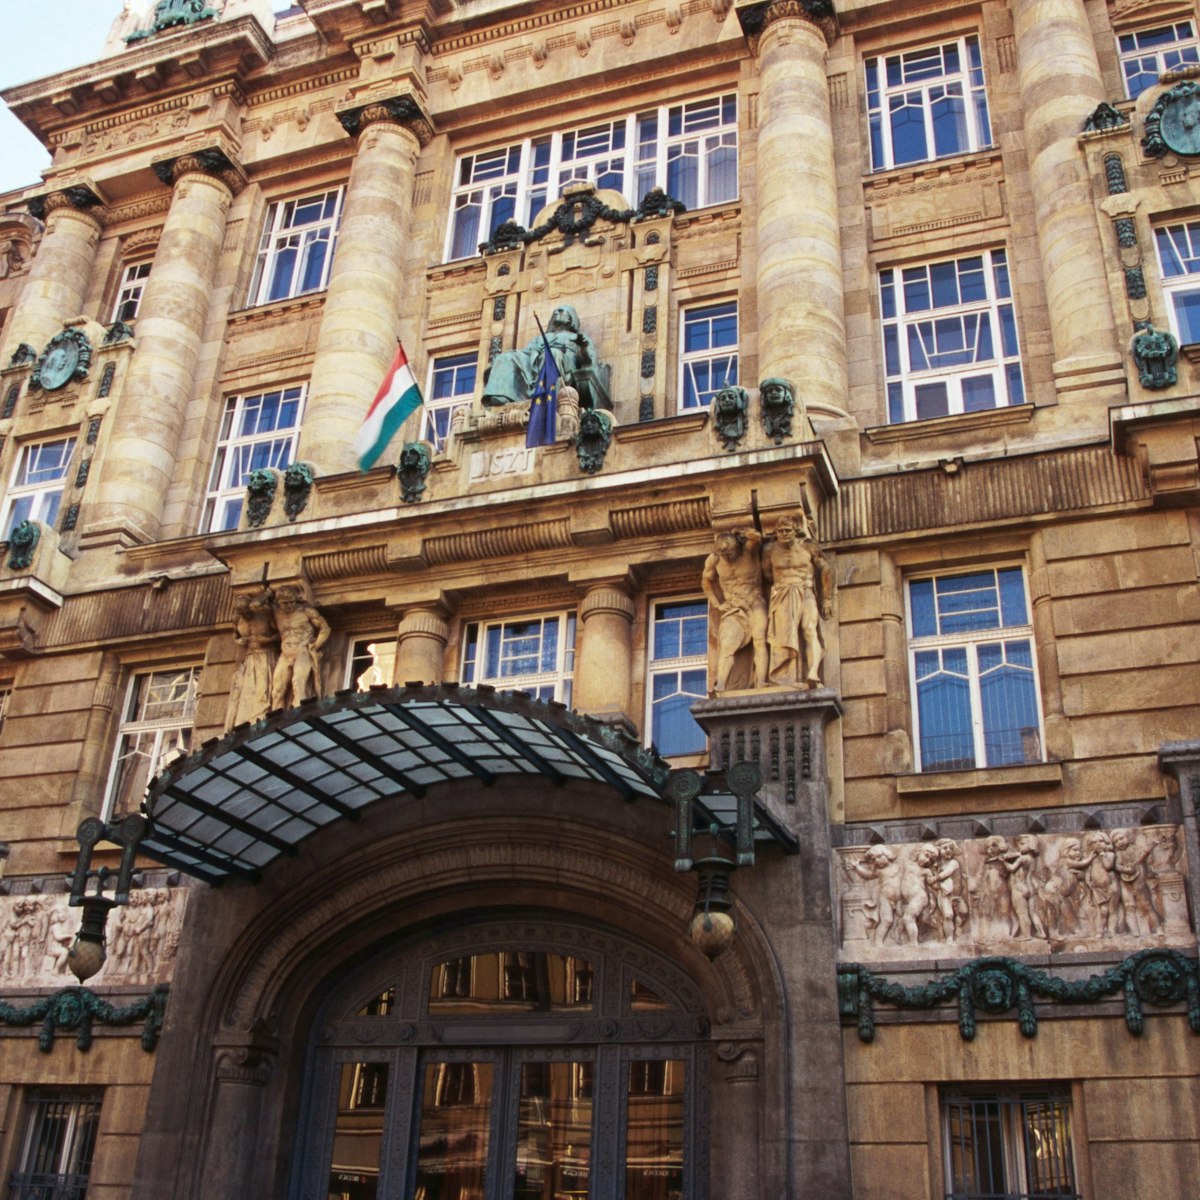 Facade of Ferenc Liszt Music Academy, Erzsebetvaros.